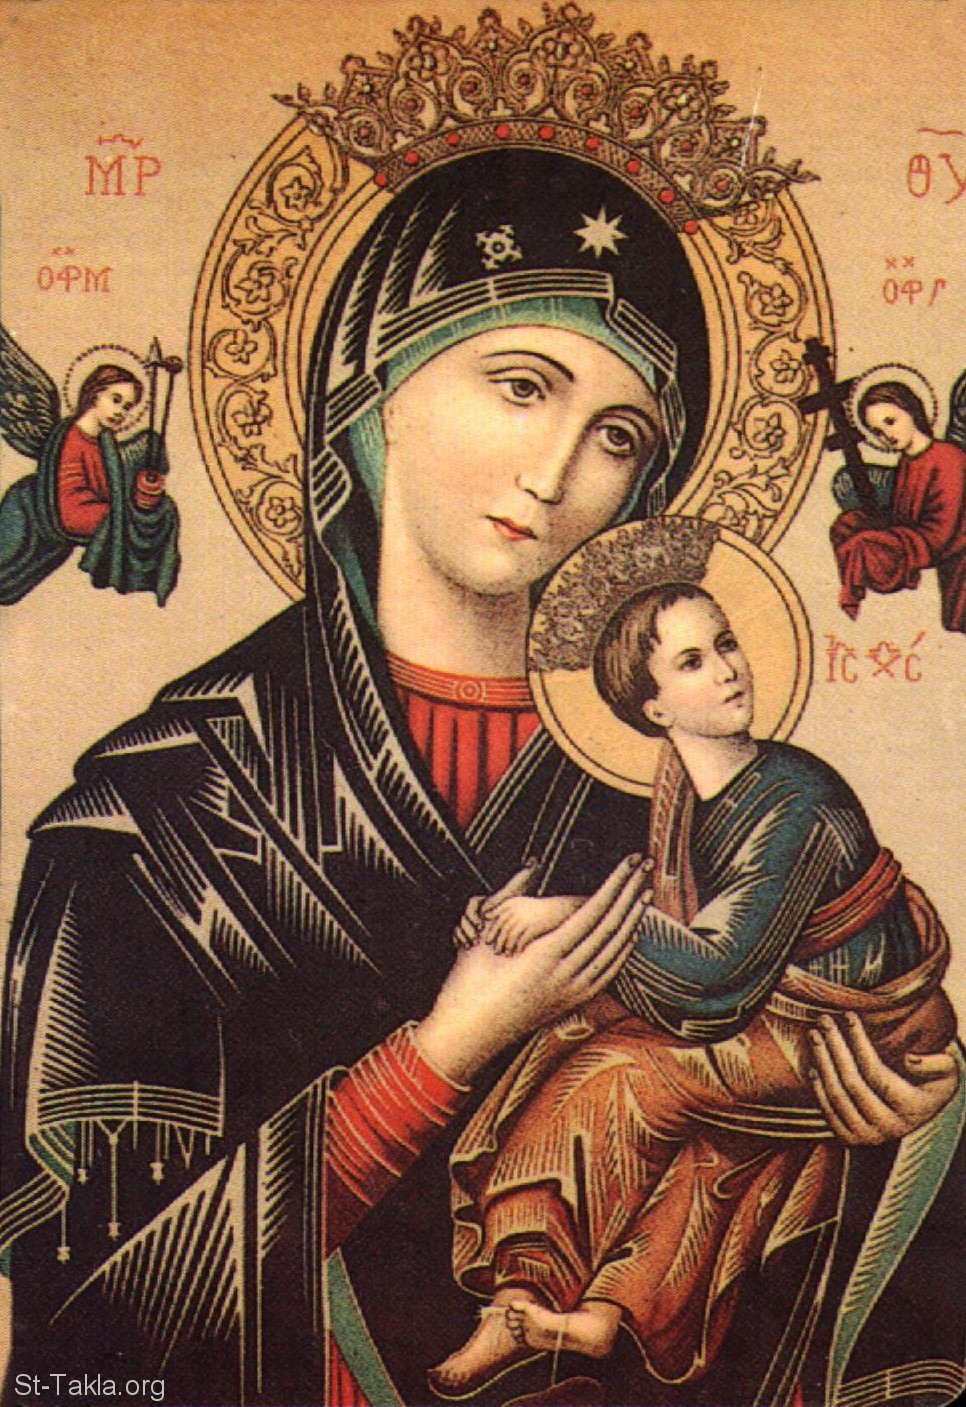 http://st-takla.org/Pix/Saints/Coptic-Saint-Mary/07-Mother-of-God-Theotokos/www-St-Takla-org__Saint-Mary_Theotokos-Mother-of-God-002.jpg